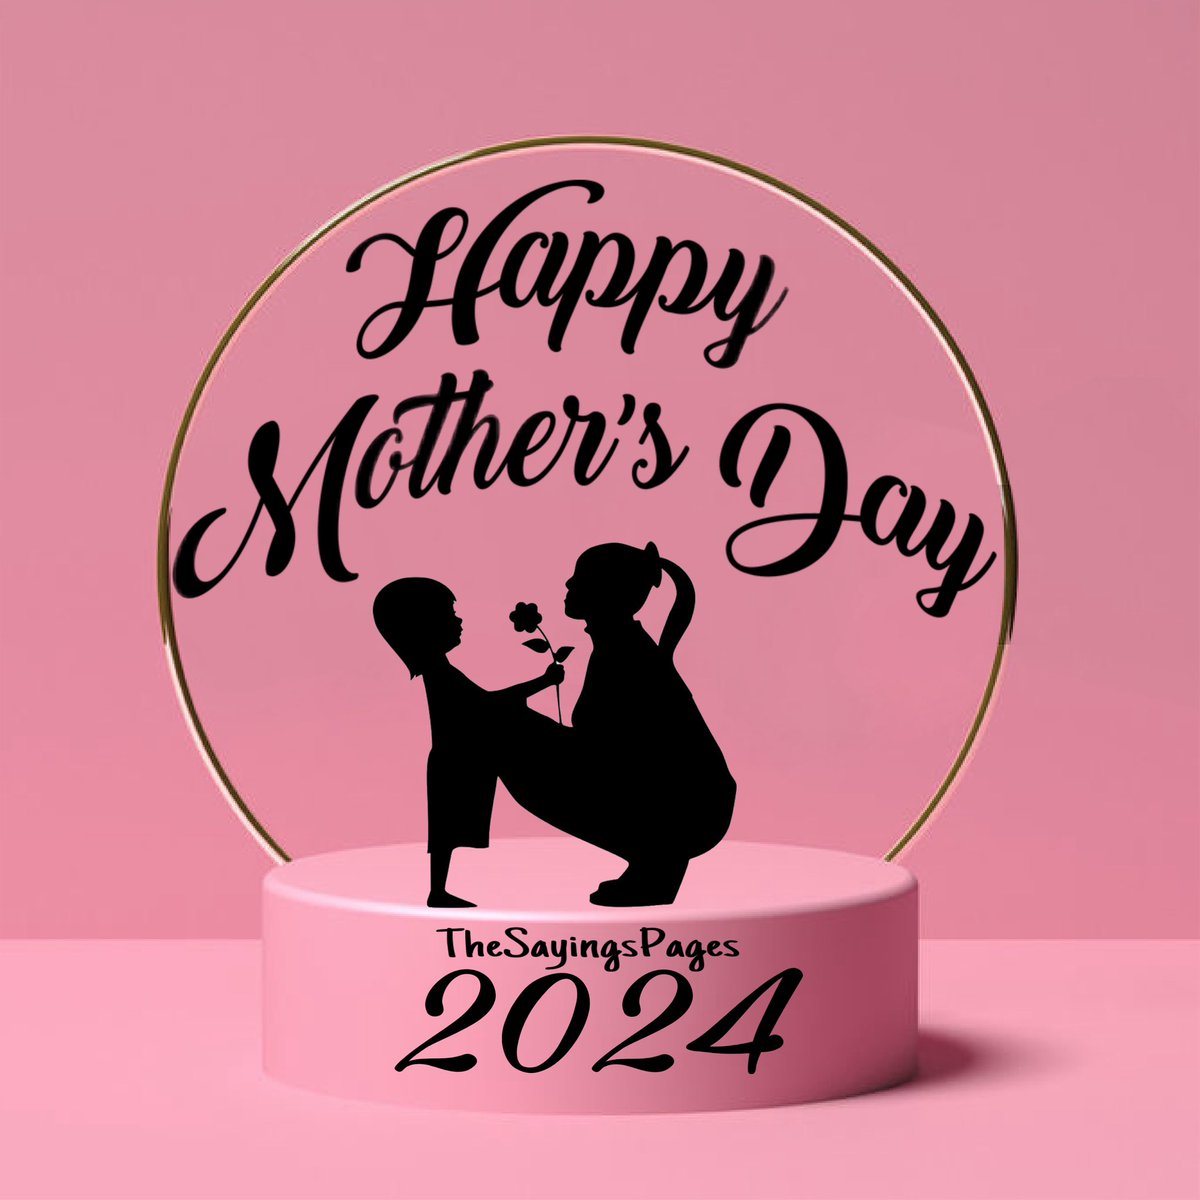 #MomLove
#MomLife
#BestMomEver
#Motherhood
#MomsRock
#SuperMom
#MomGoals
#ThanksMom
#MommyTime
#MommyAndMe
#MomLifeIsTheBestLife
#CelebratingMom
#ForeverGrateful
#MamaBear
#MomStrong
#motherandchild #motherday2024 #Happymotherday2024